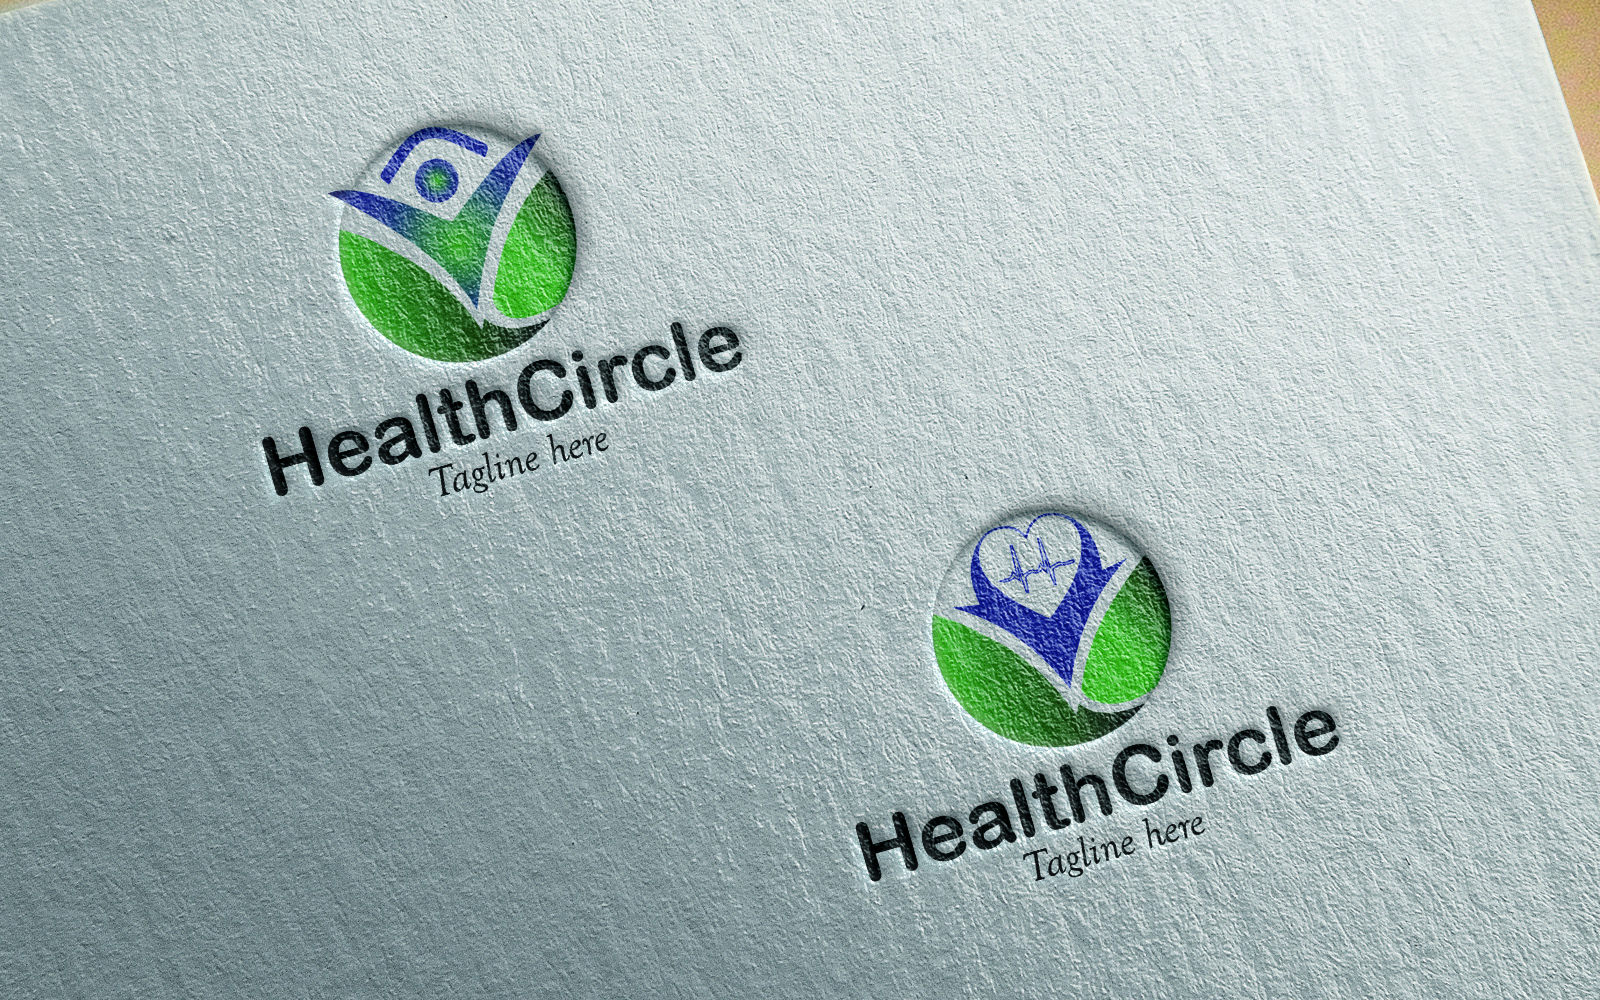 Professional Health Circle Logo.